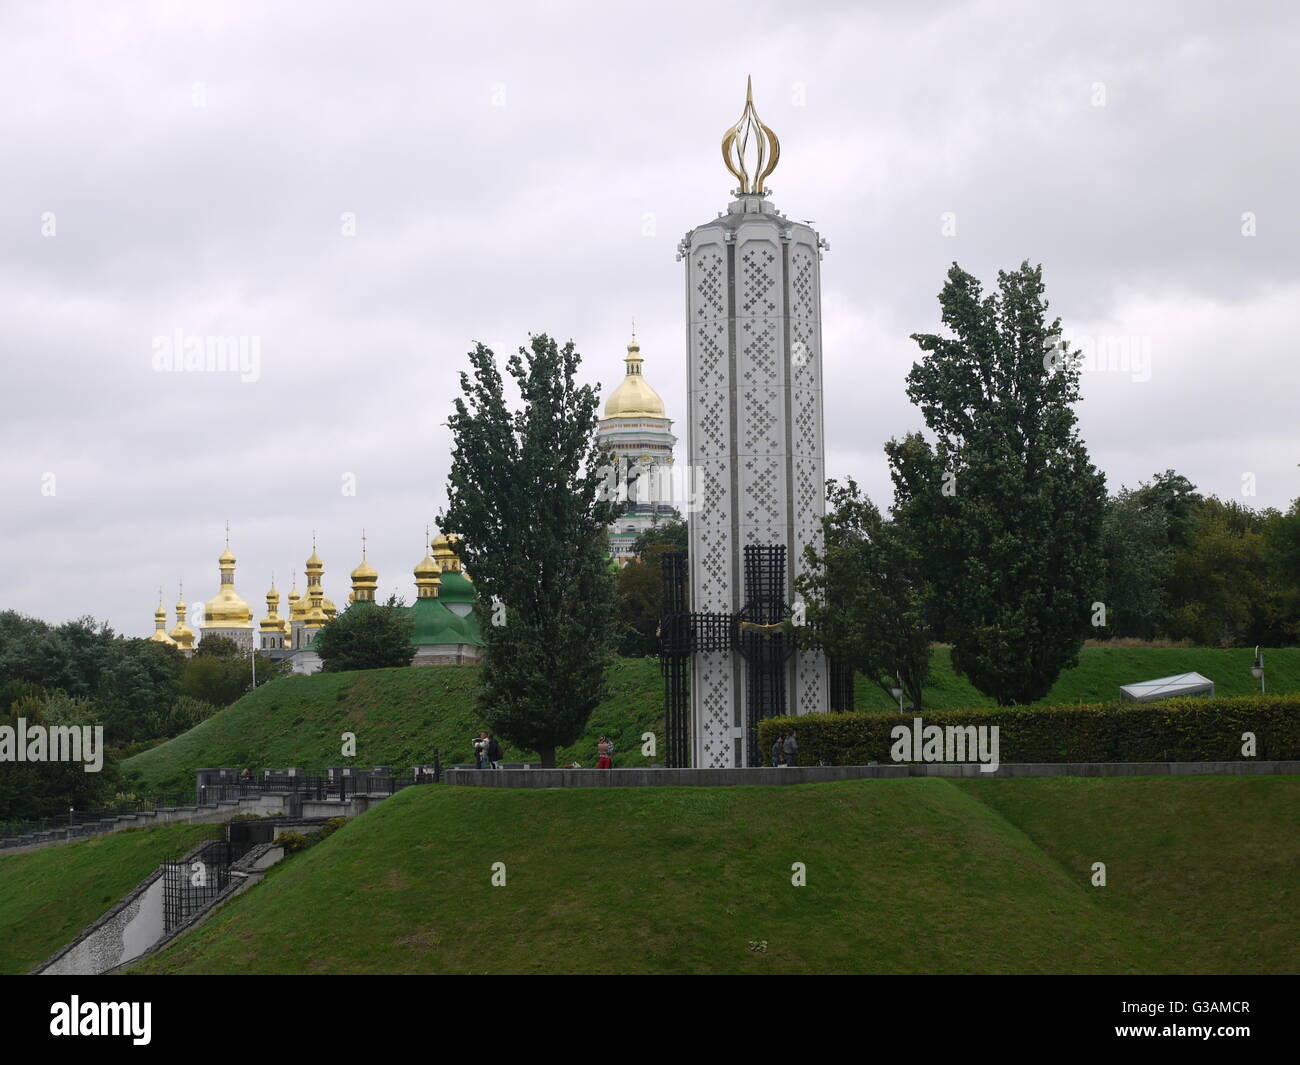 Memorial for Holodomor, artificial famine of 1933 in Ukraine, in the city center of Kiev Stock Photo